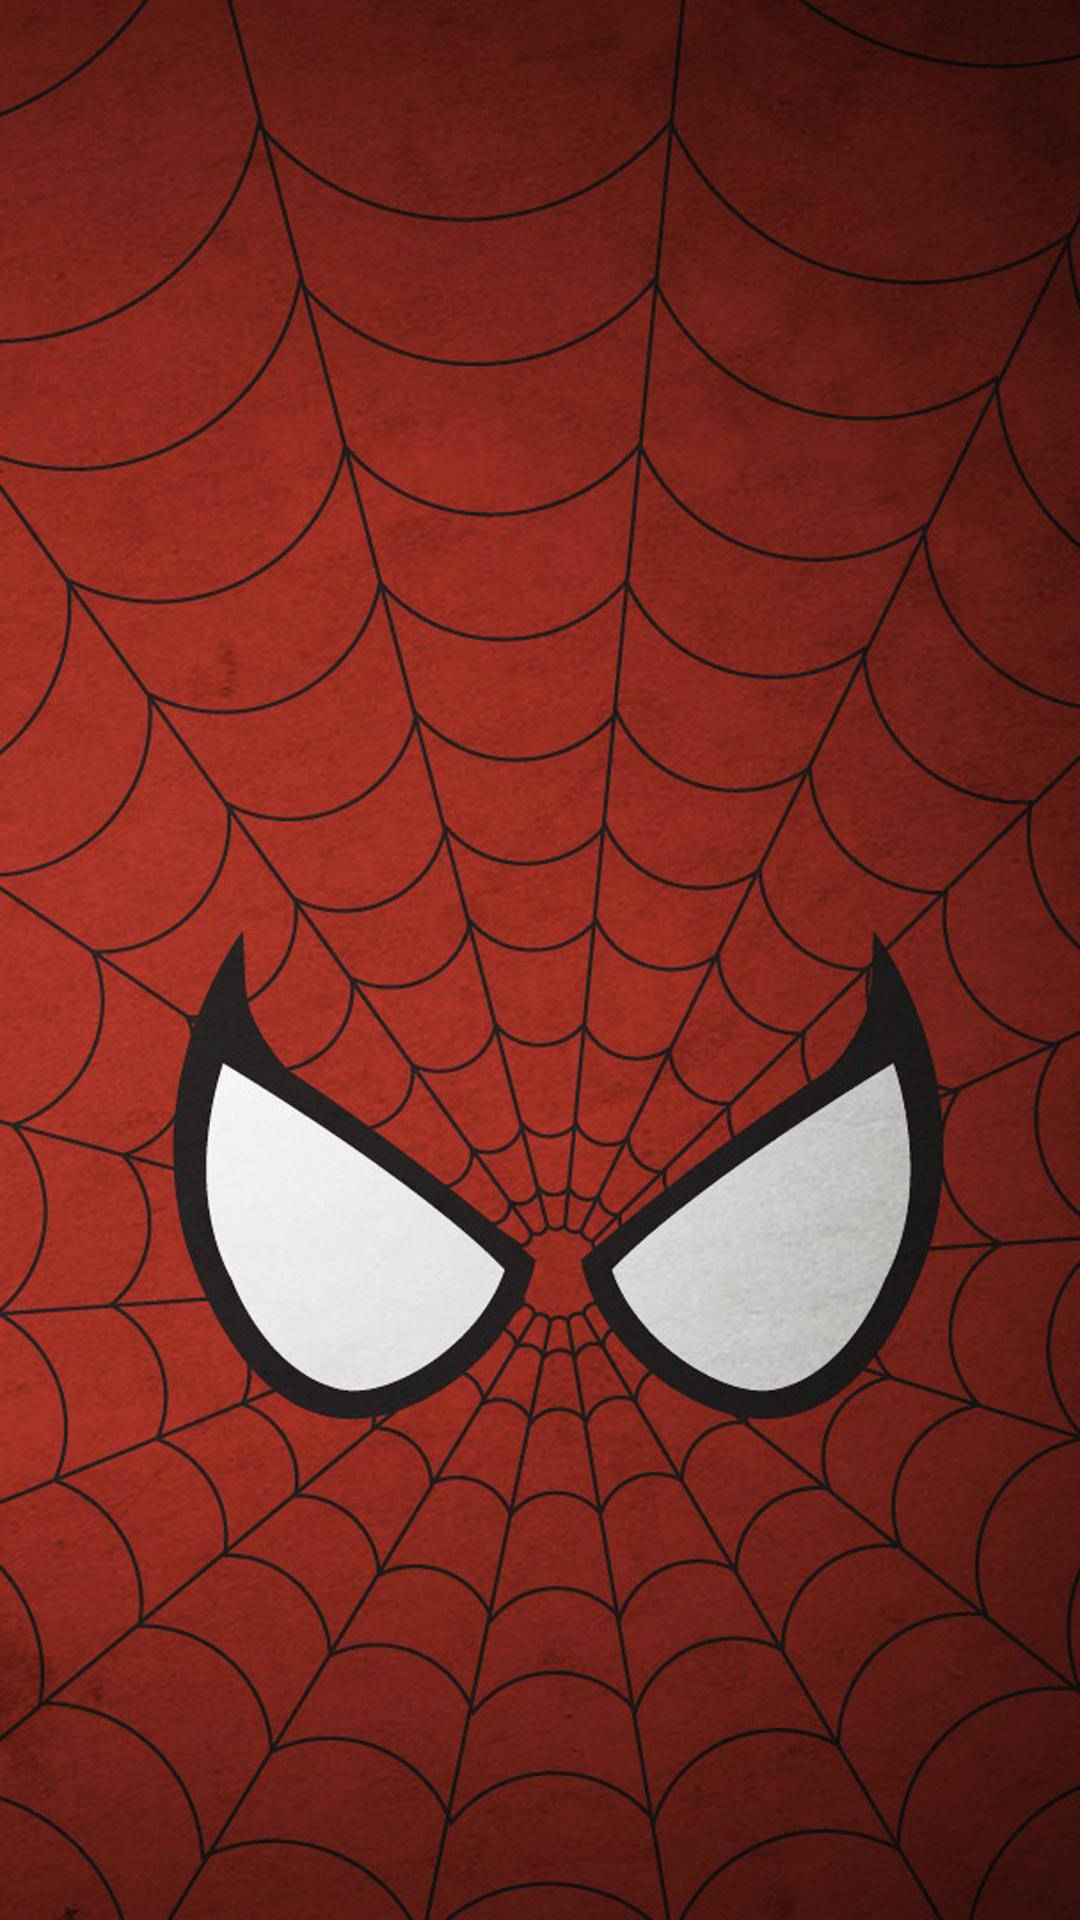 Cobweb Mask Spider Man Iphone Wallpaper